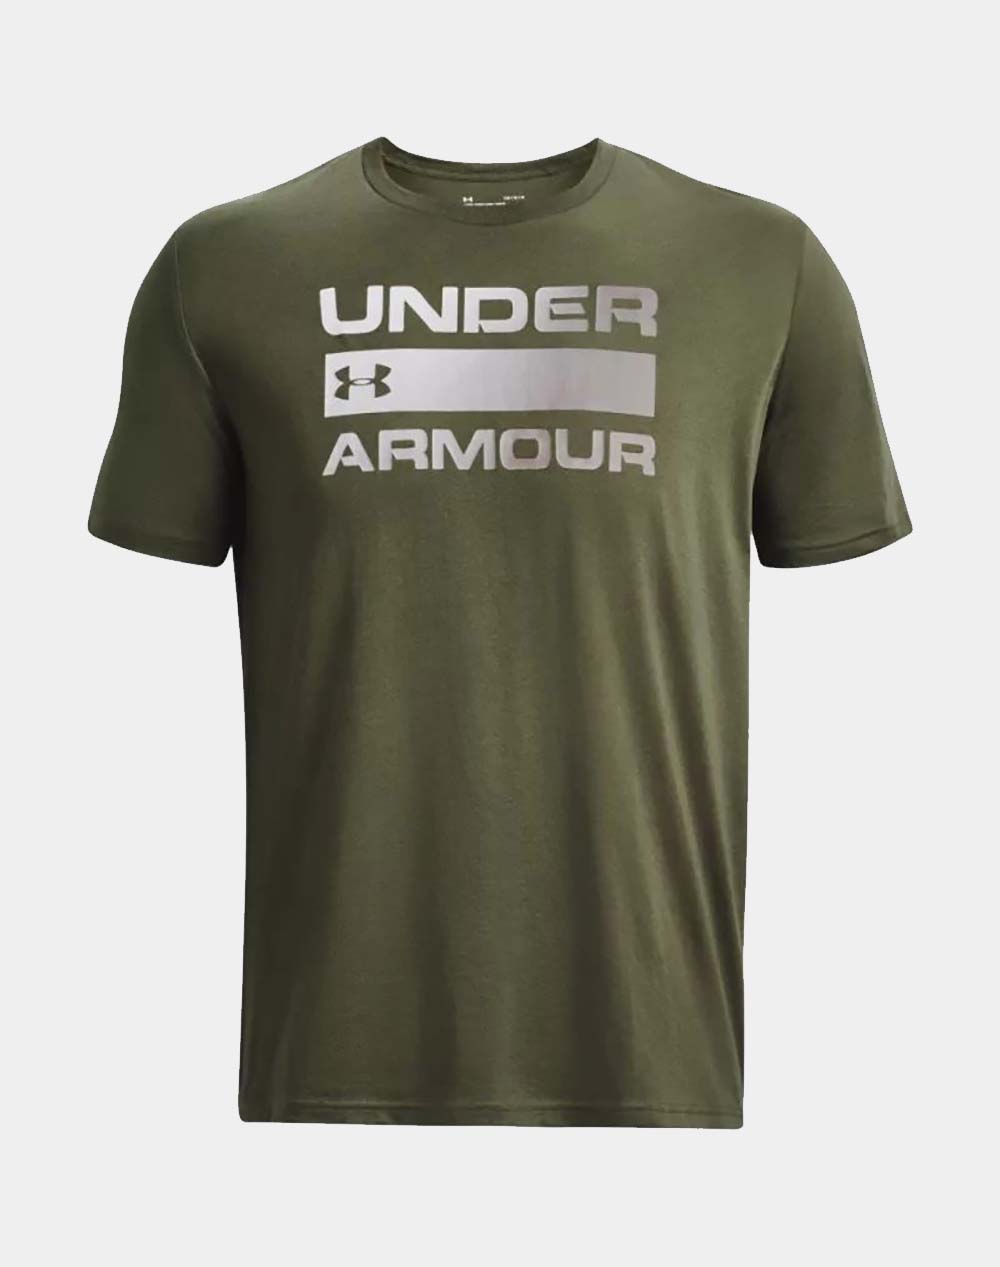 UNDER ARMOUR Mens UA Team Issue Wordmark Short Sleeve